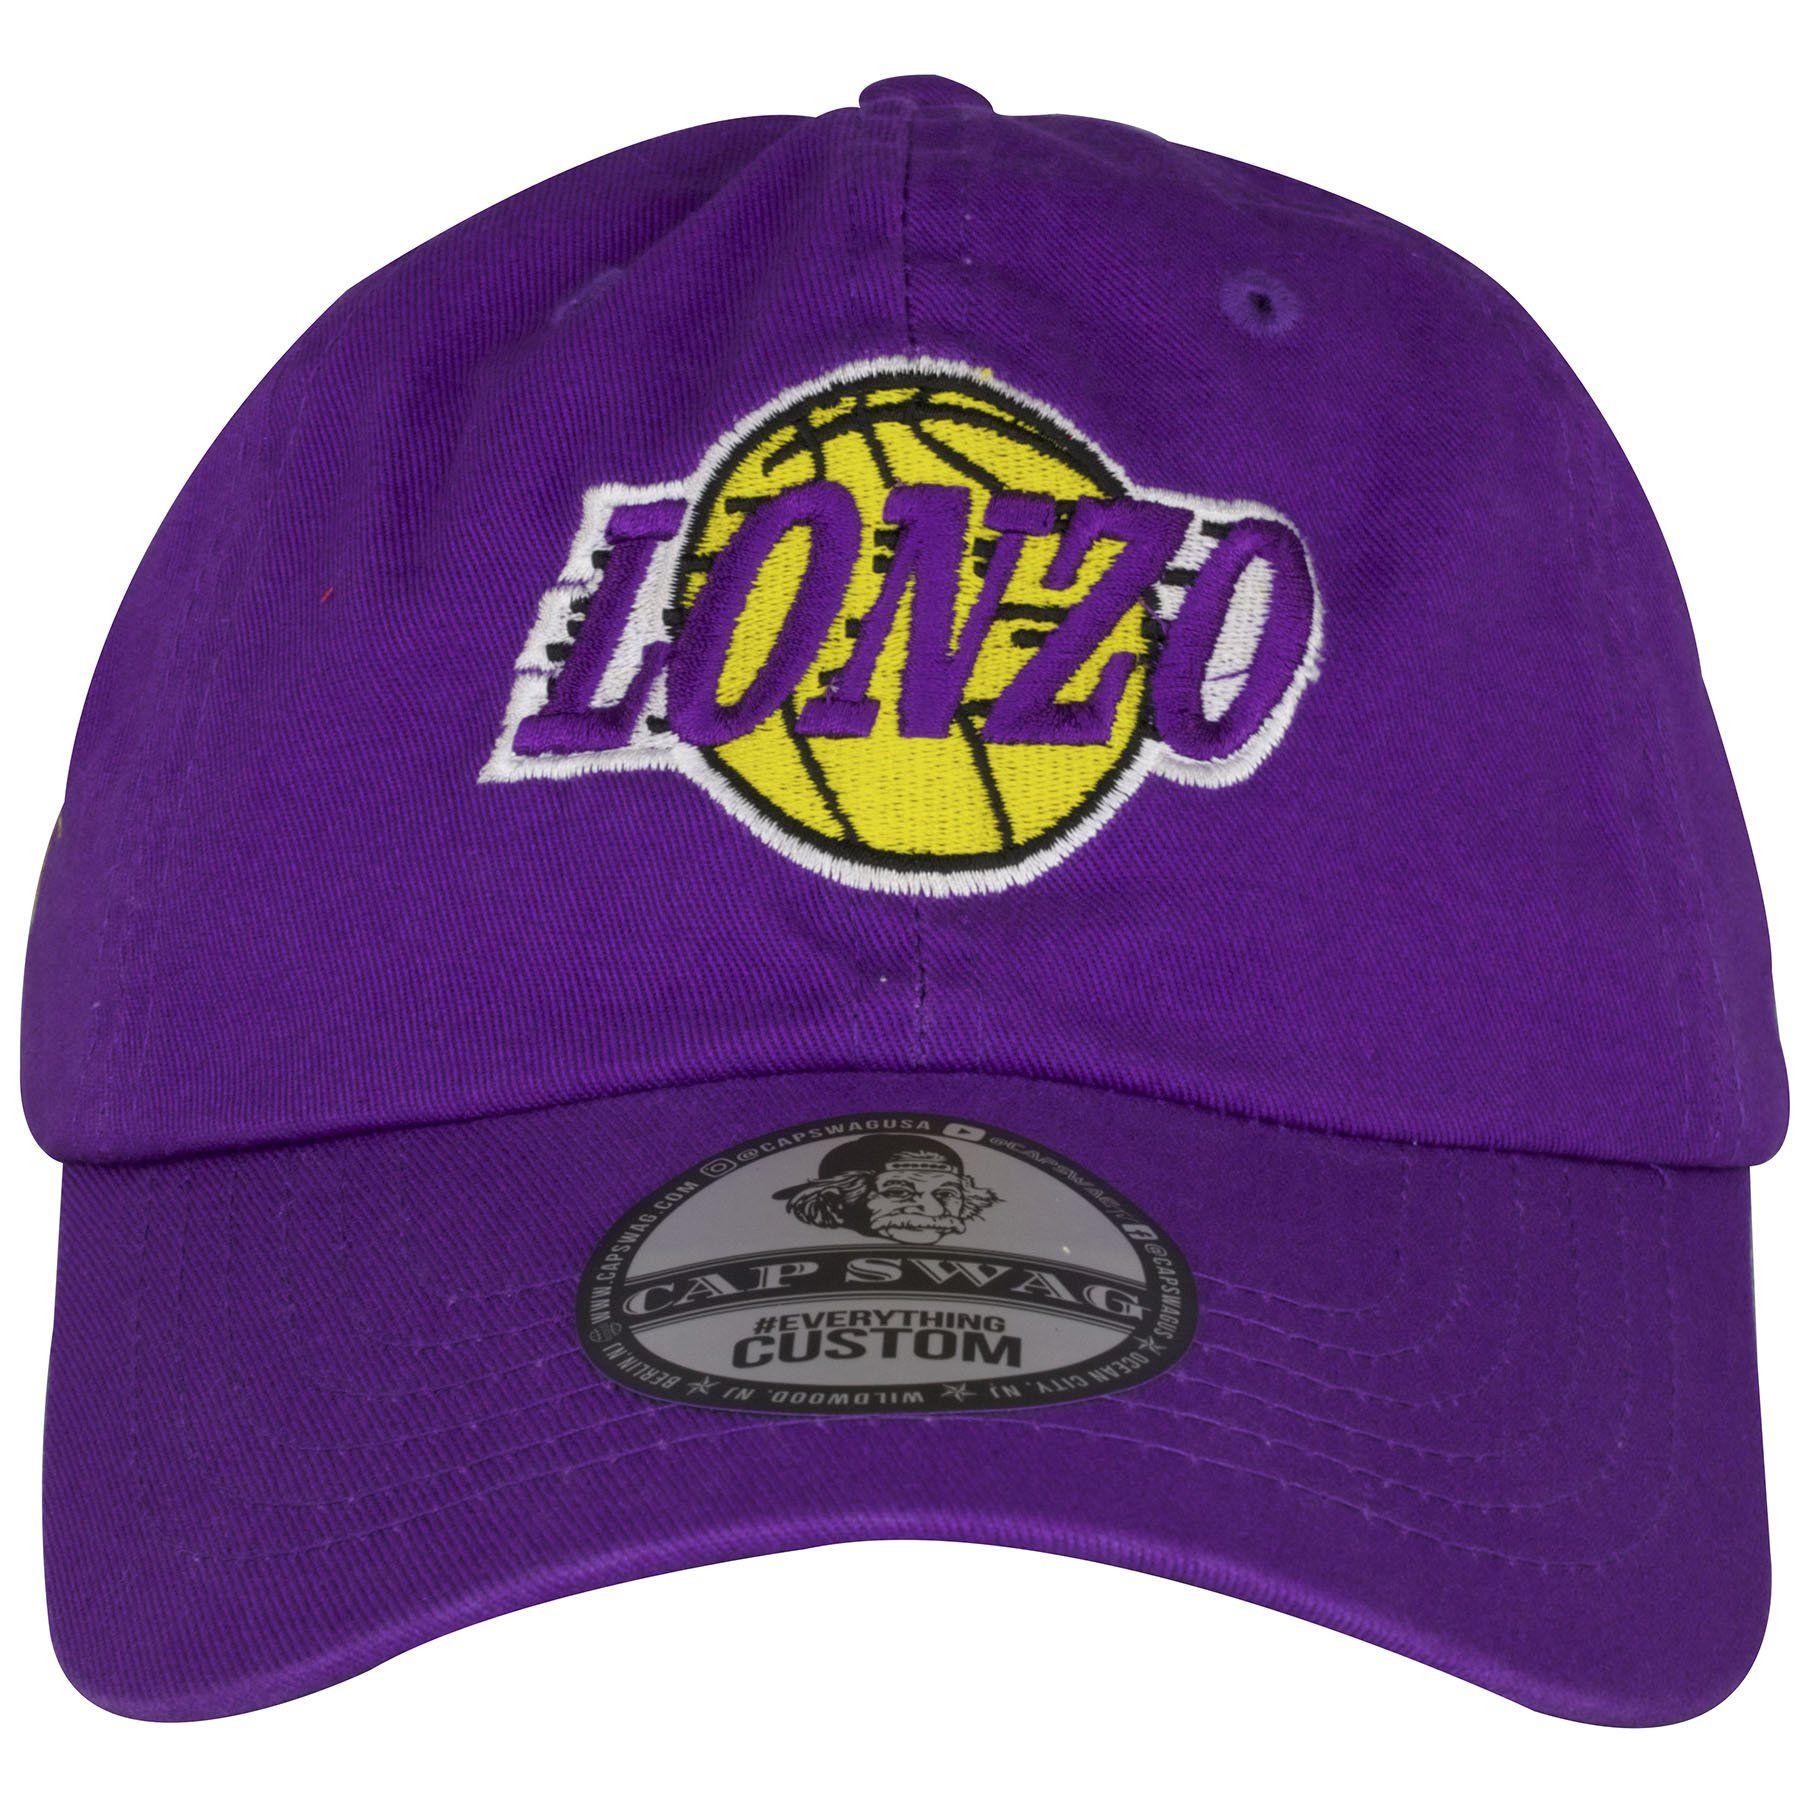 Ball Hat Logo - Los Angeles Lakers Lonzo Ball Purple Adjustable Dad Hat – Cap Swag